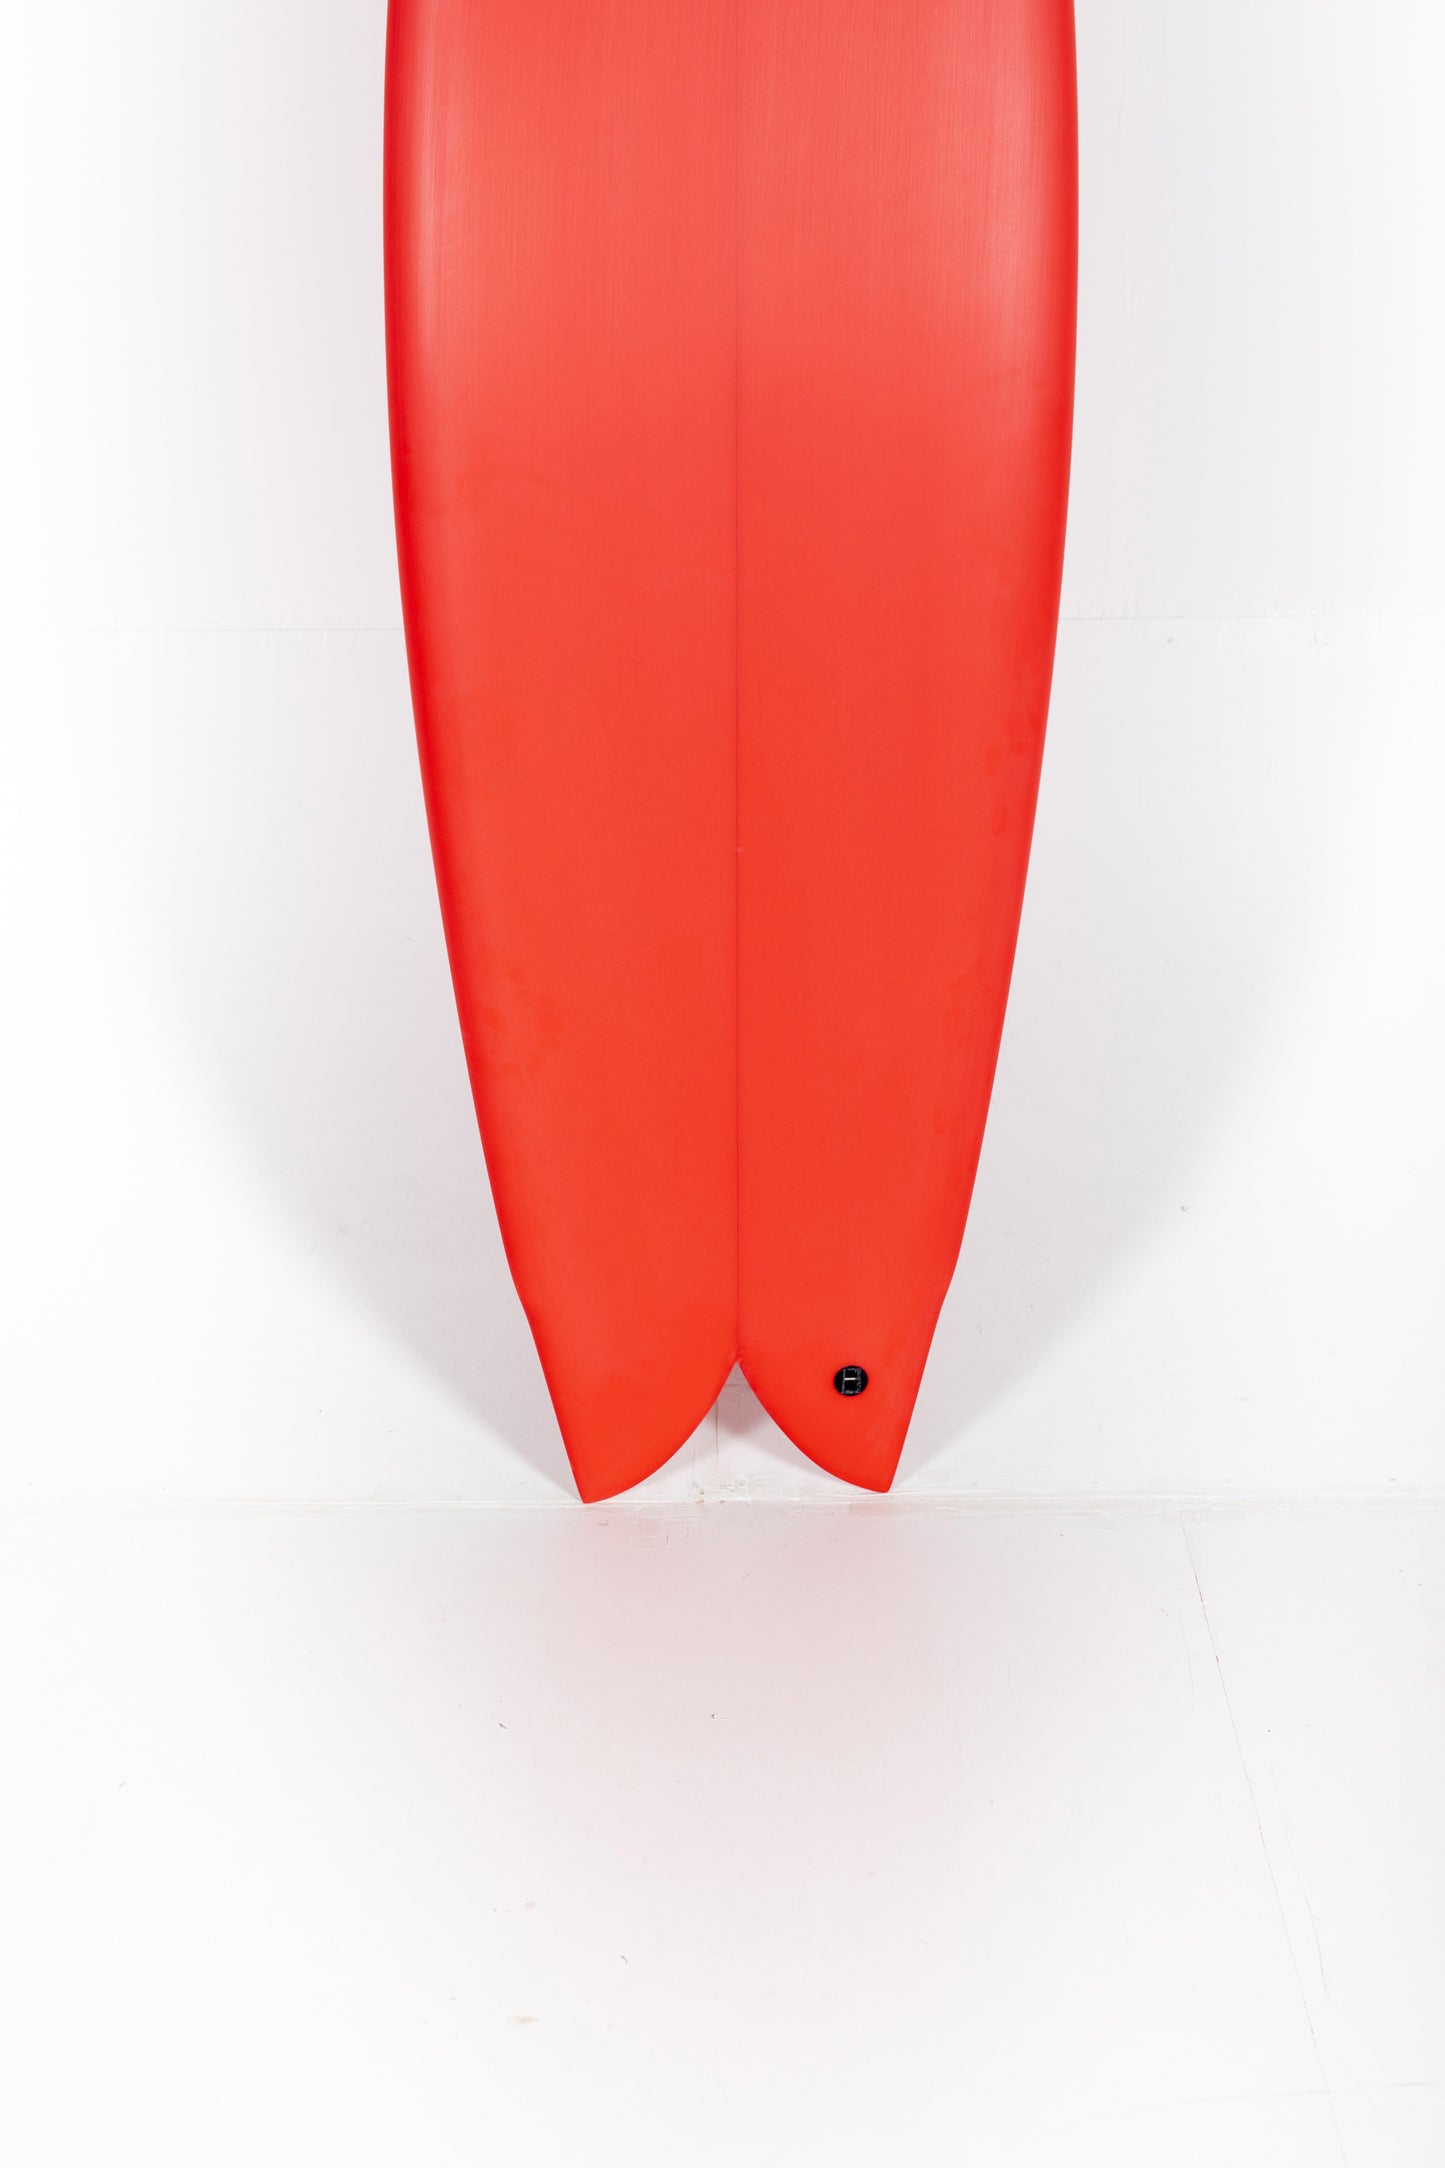 
                  
                    Pukas Surf Shop - Pukas Surfboard - PEGASO by Chris Christenson - 5´8” x 19 1/4 x 2 1/2 - 32,01L - PC00509
                  
                